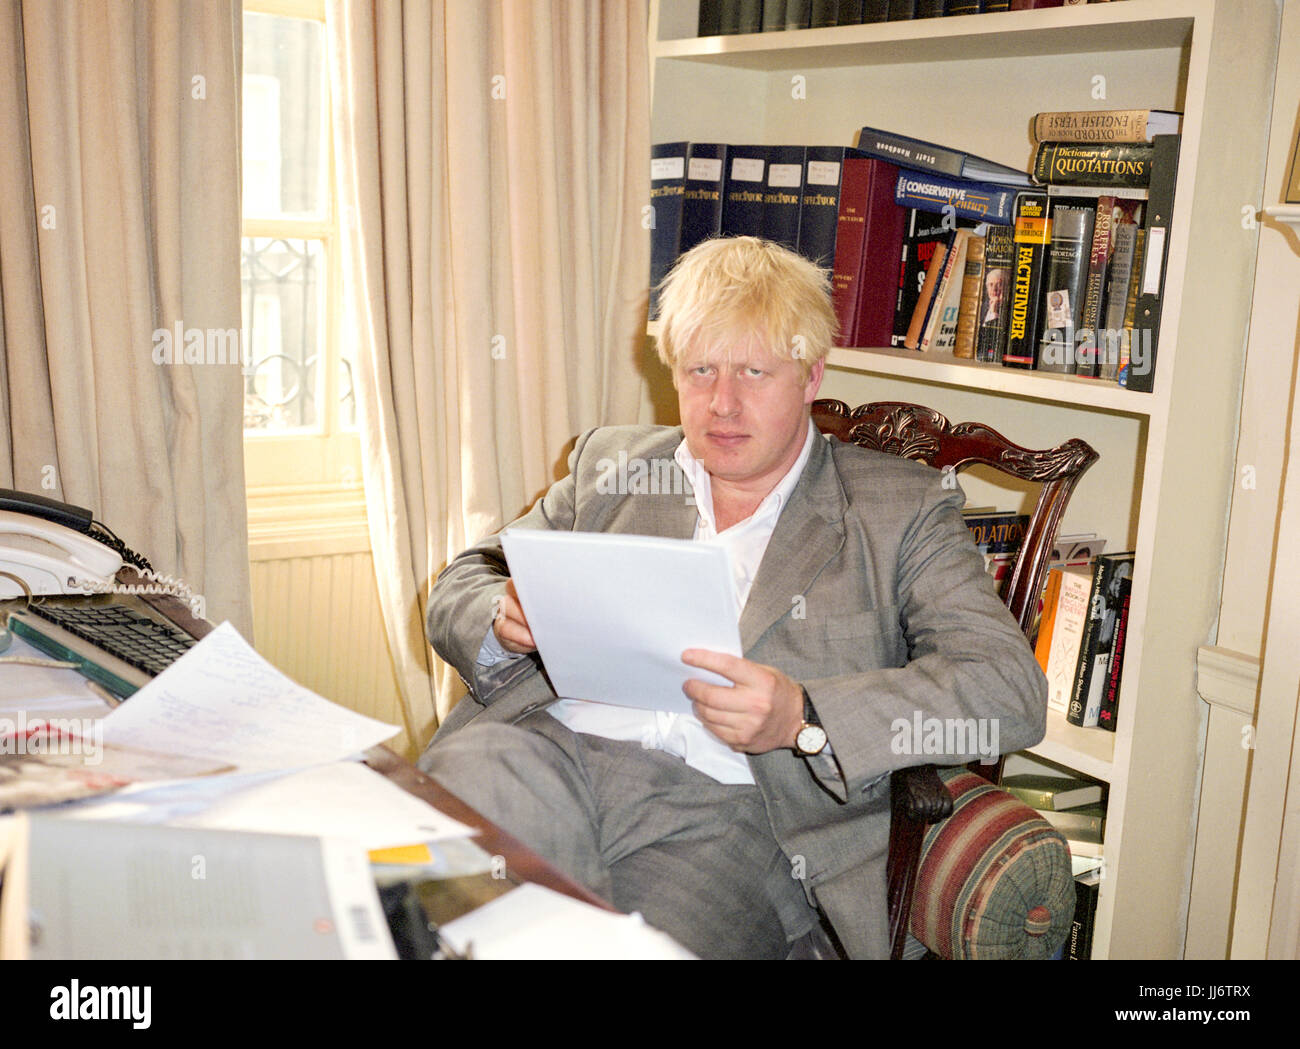 Boris Johnson Primer Ministro conservador, editor de la revista Spectator fotografiado en la oficina de la revista Spectator en 2003, Westminster, Londres, Inglaterra. Foto de stock